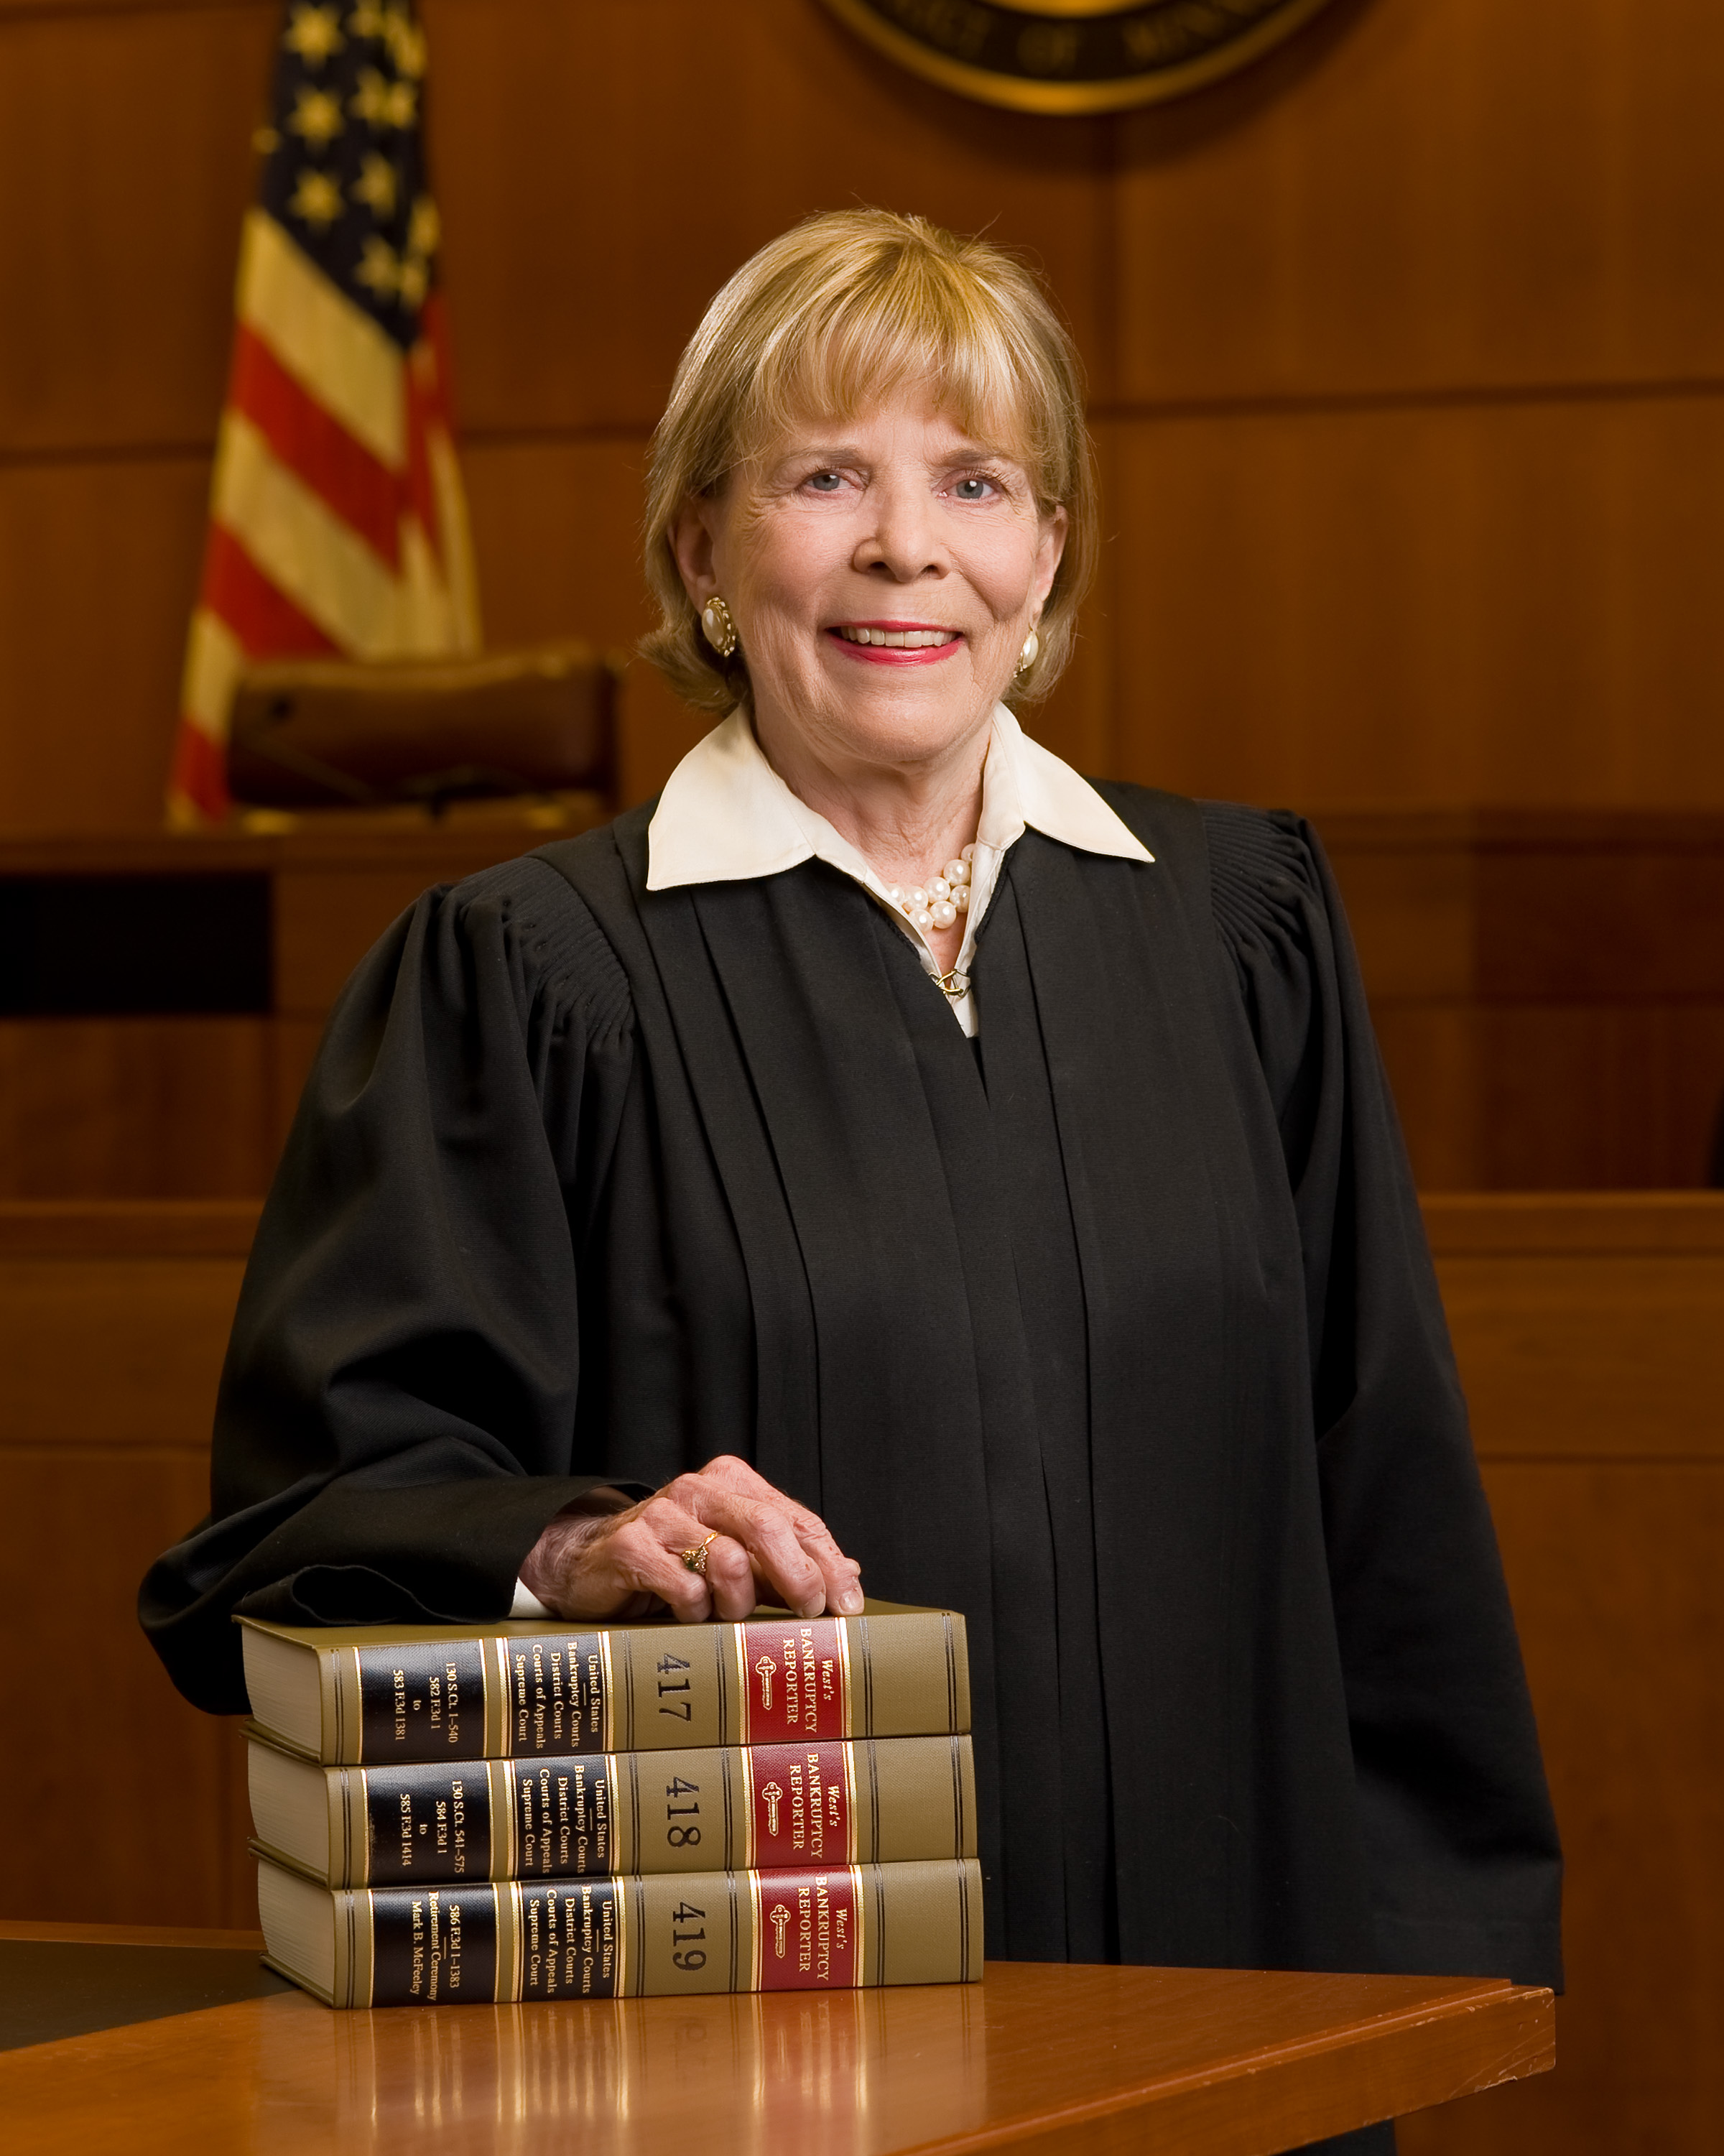 Judge Nancy C. Dreher